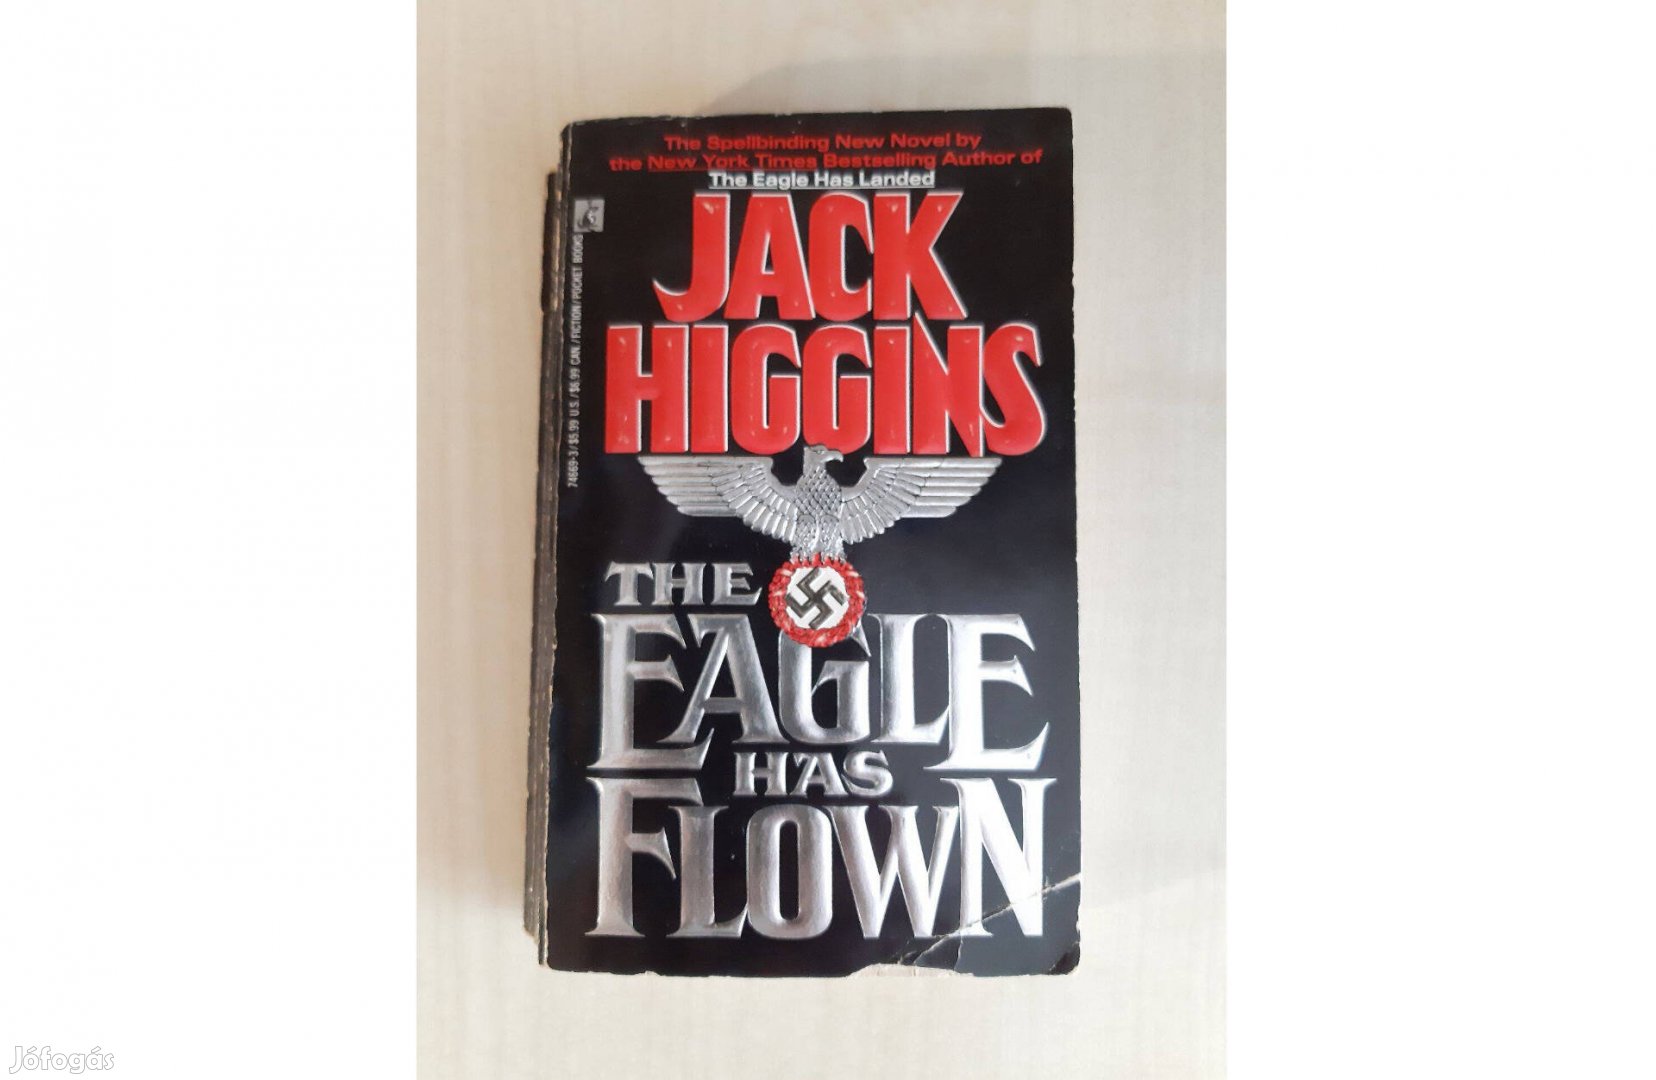 Jack Higgins: The Eagle Has Flown